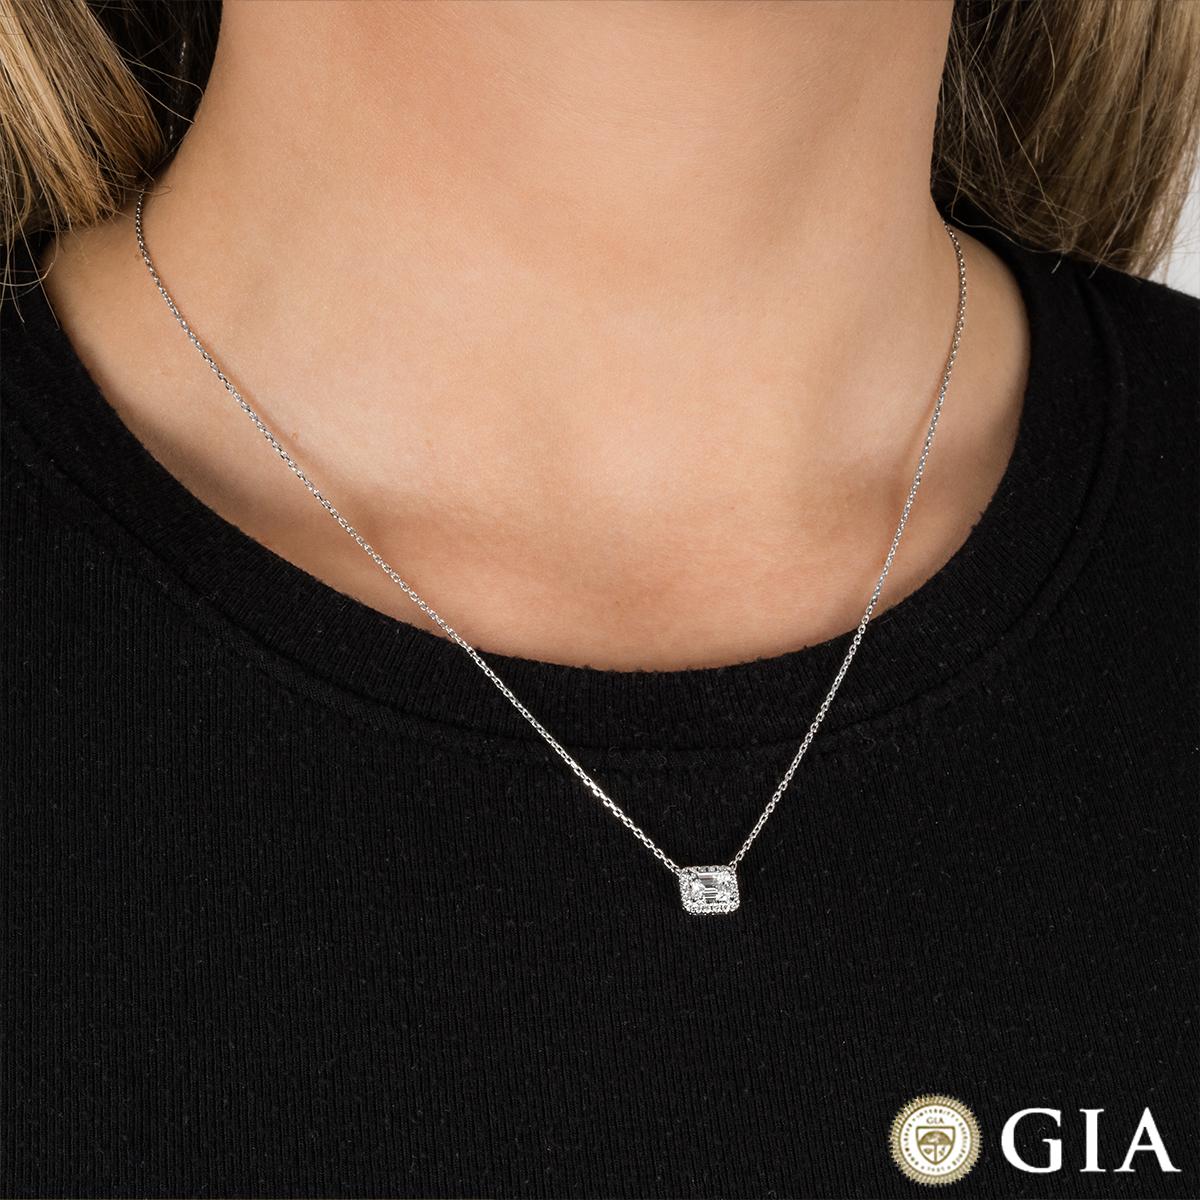 GIA Certified White Gold Emerald Cut Diamond Pendant 0.51 Carat F/VS1 For Sale 2